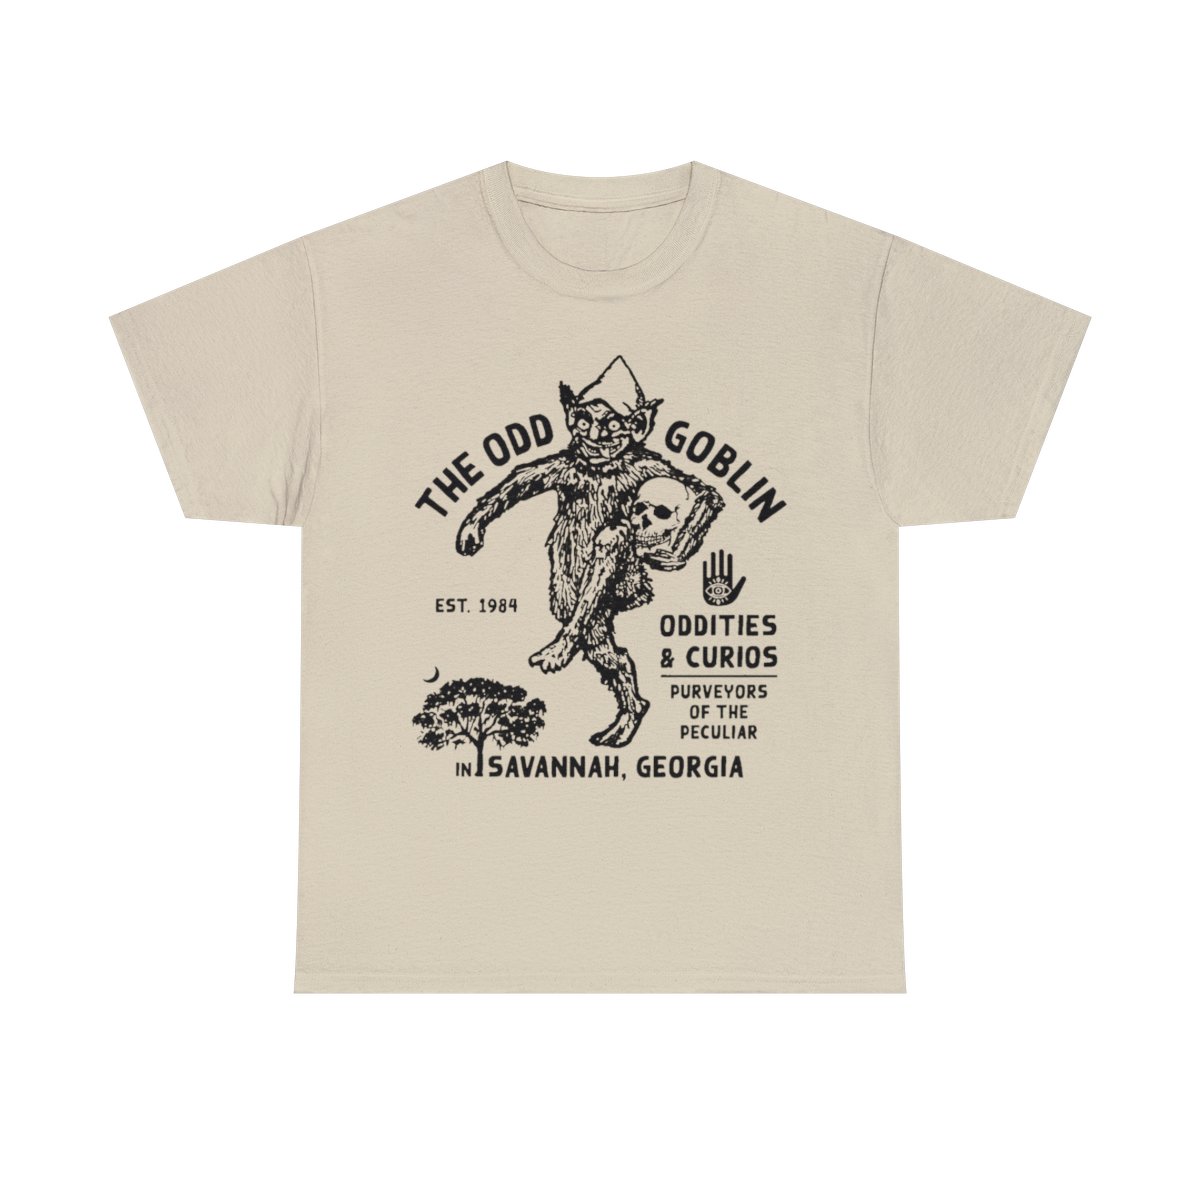 Oddities Goblin T-Shirt Weird Shirts for Men Women Unusual Occult Shirt Original Design Strange Novelty Unisex Heavy Cotton Tee